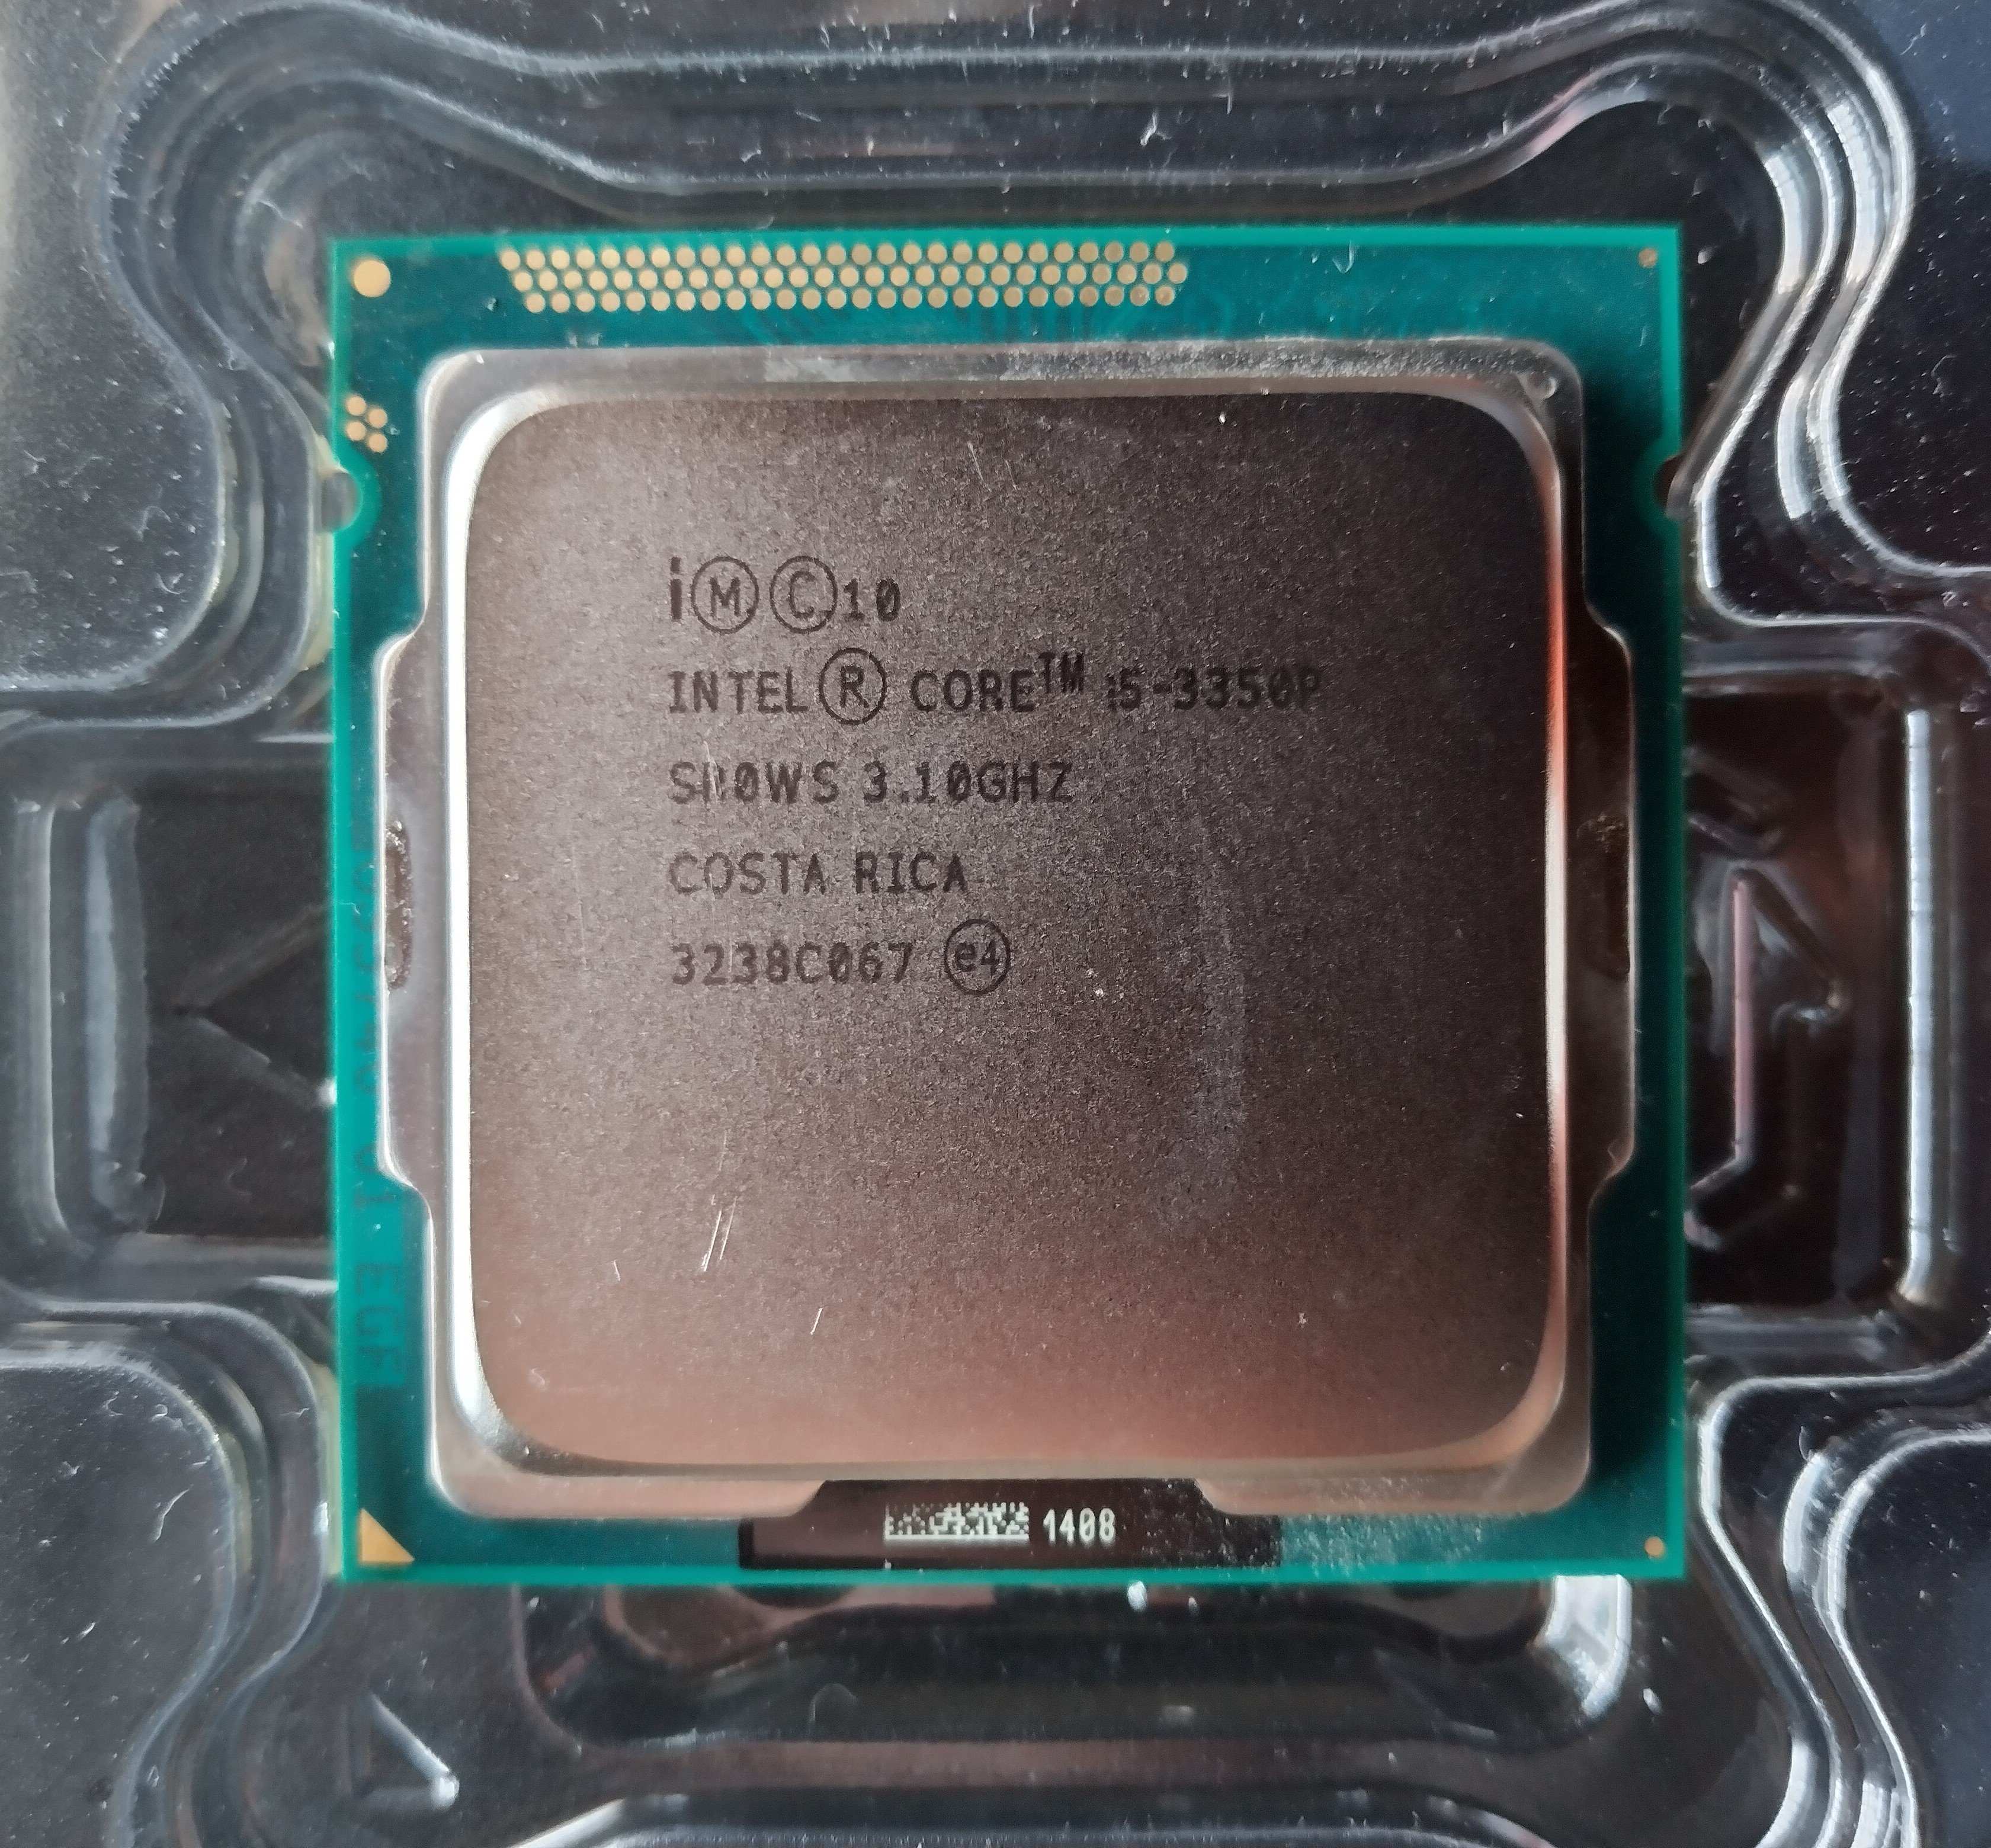 More information about "Intel i5 3350P 4πύρηνος IvyBridge + Cooler Thermalright TrueSpirit 90 Direct"